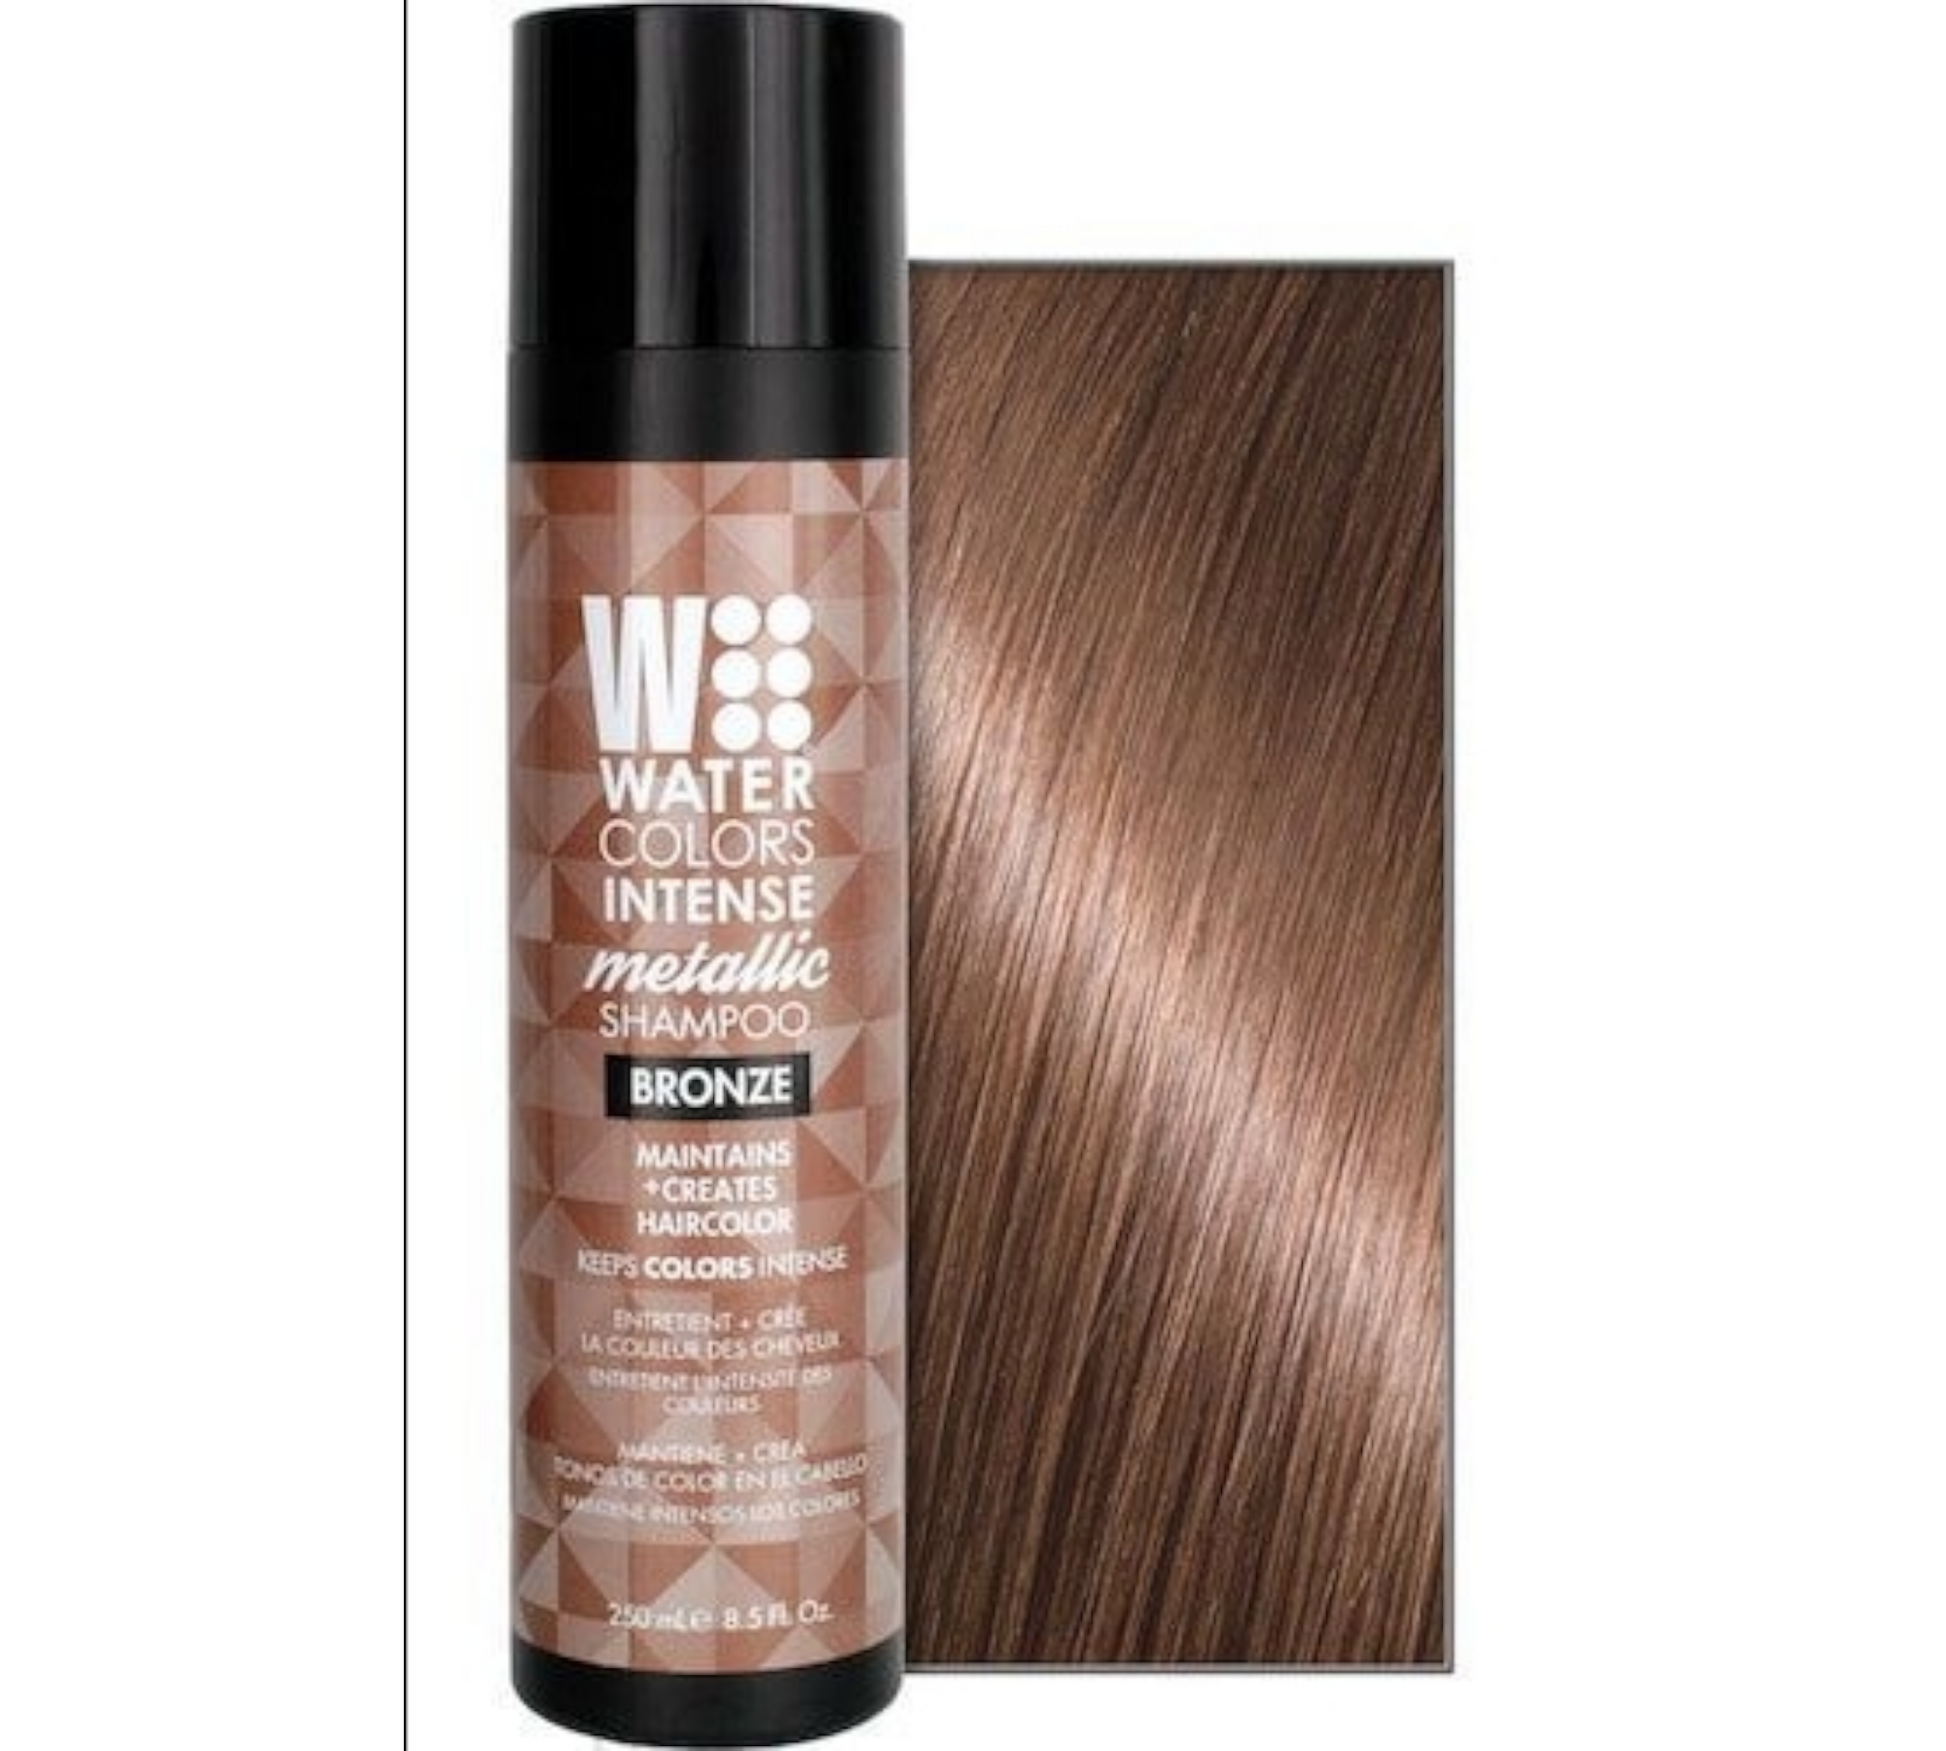 Watercolors Hair Cupid Beauty Supplies 8.5 Fl.Oz / Bronze Temporary Color Shampoos Watercolors Intense Metallic Shampoo